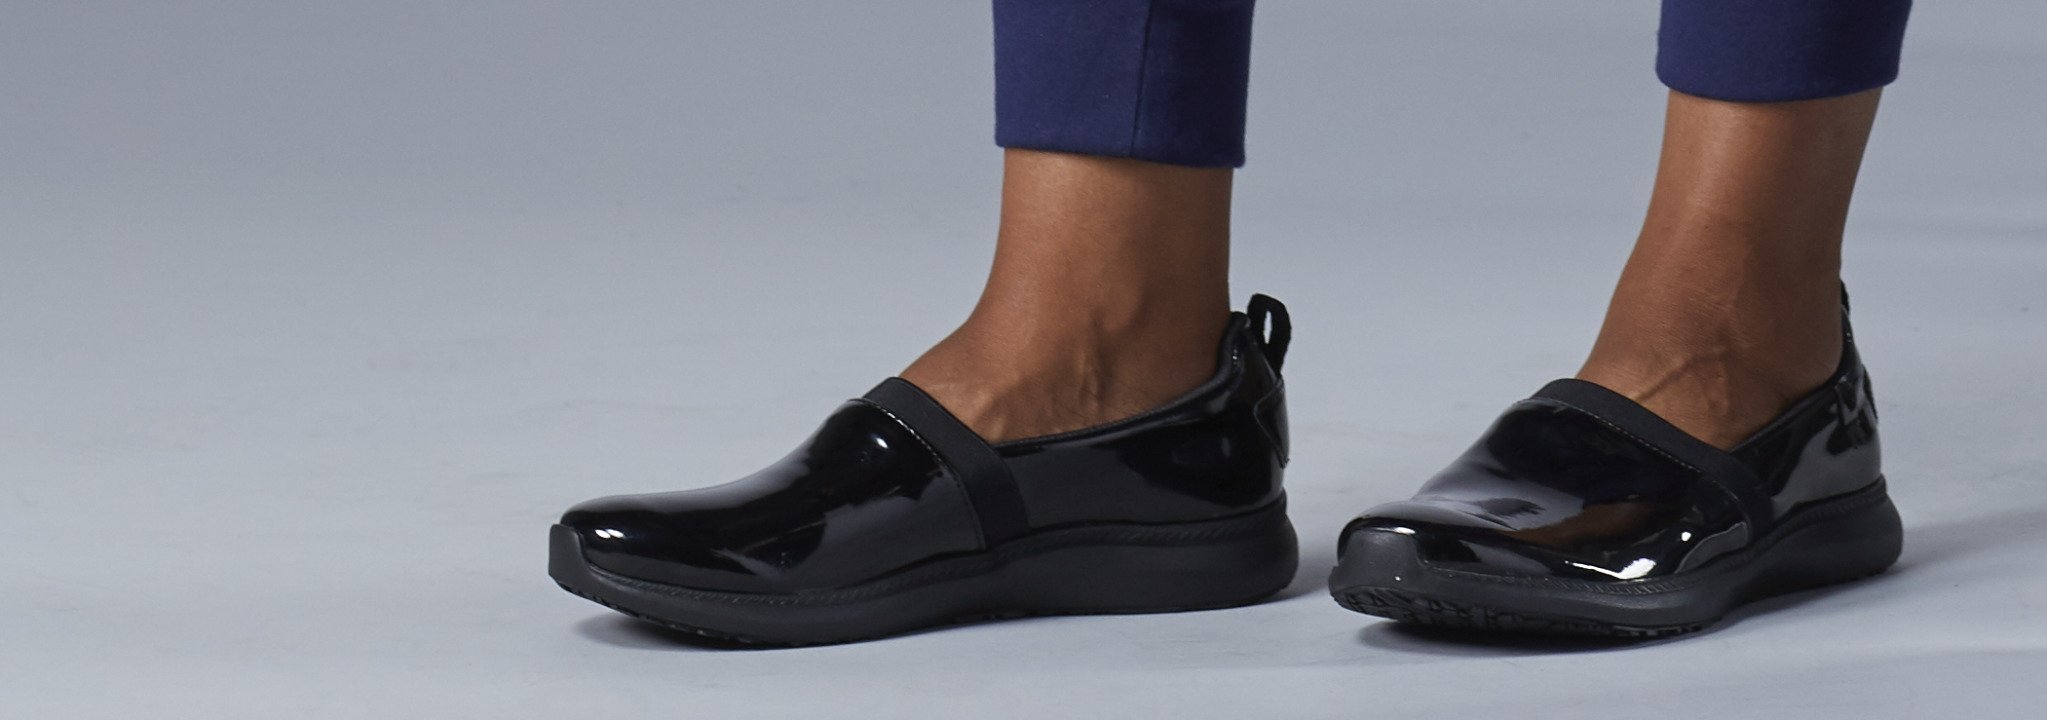 women's slip resistant loafers